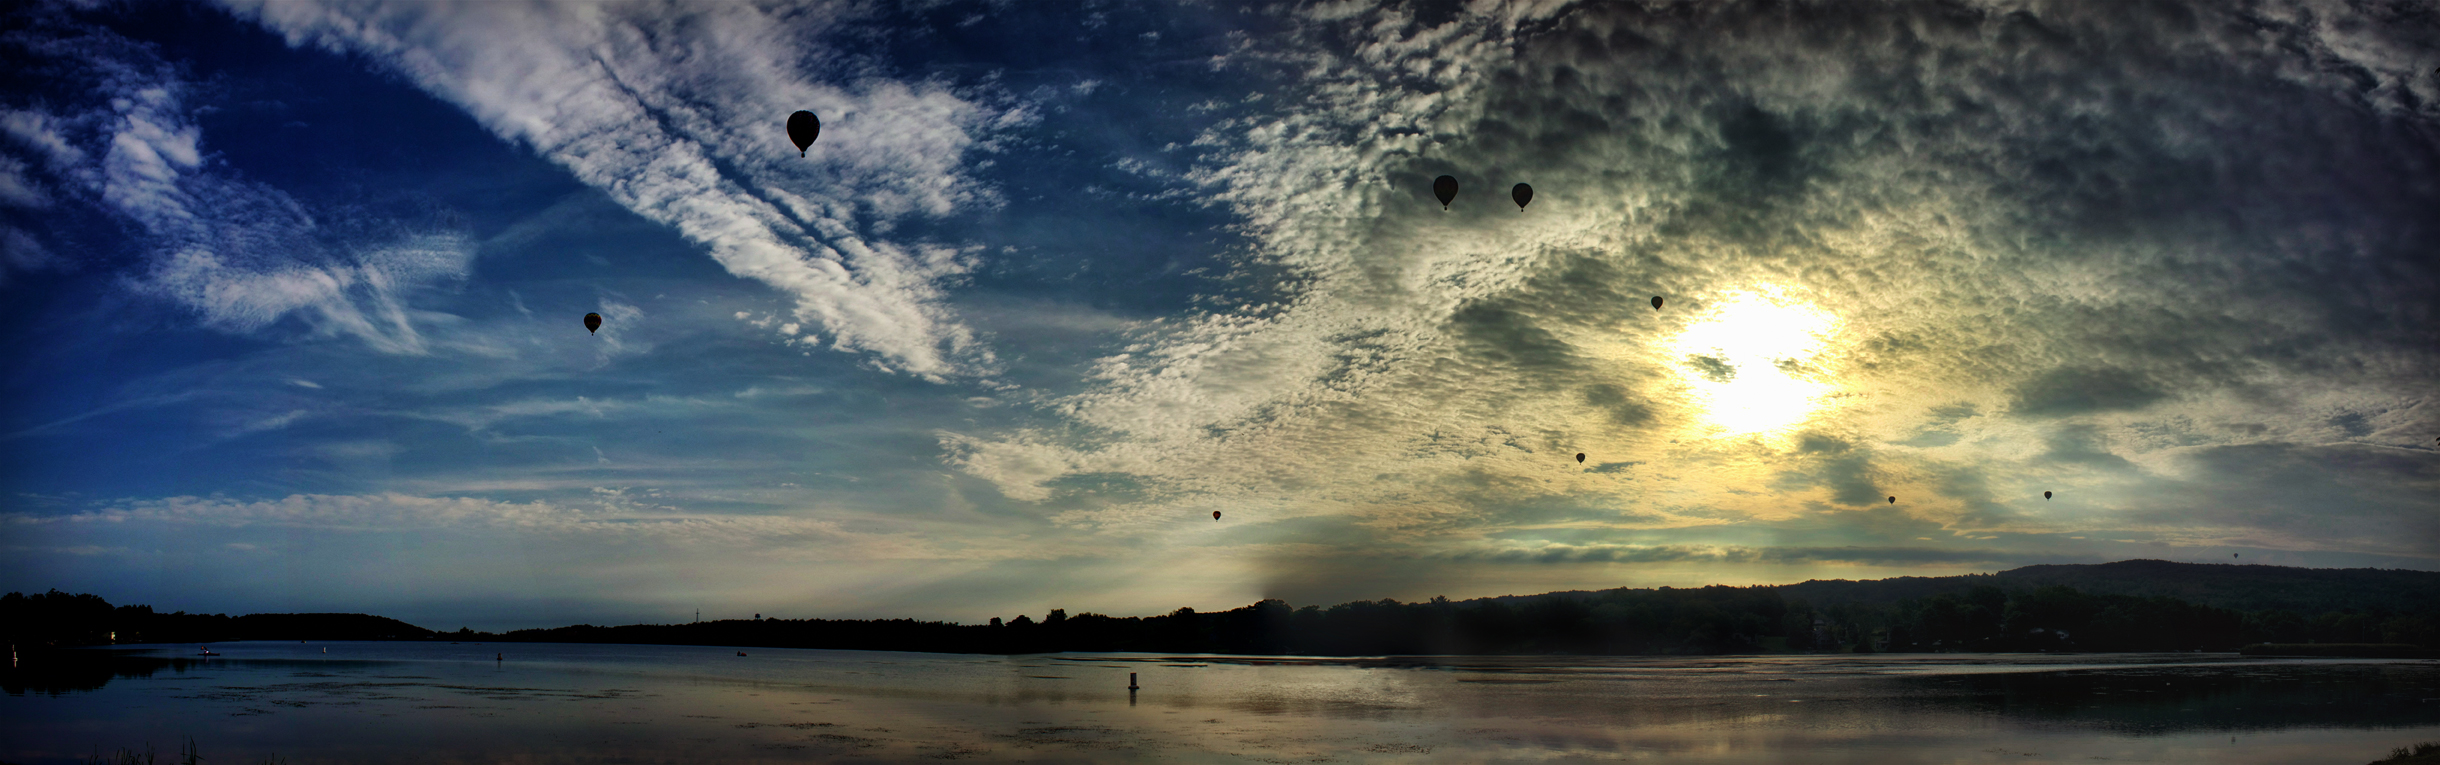 Hot Air Balloons Over The Reservoir